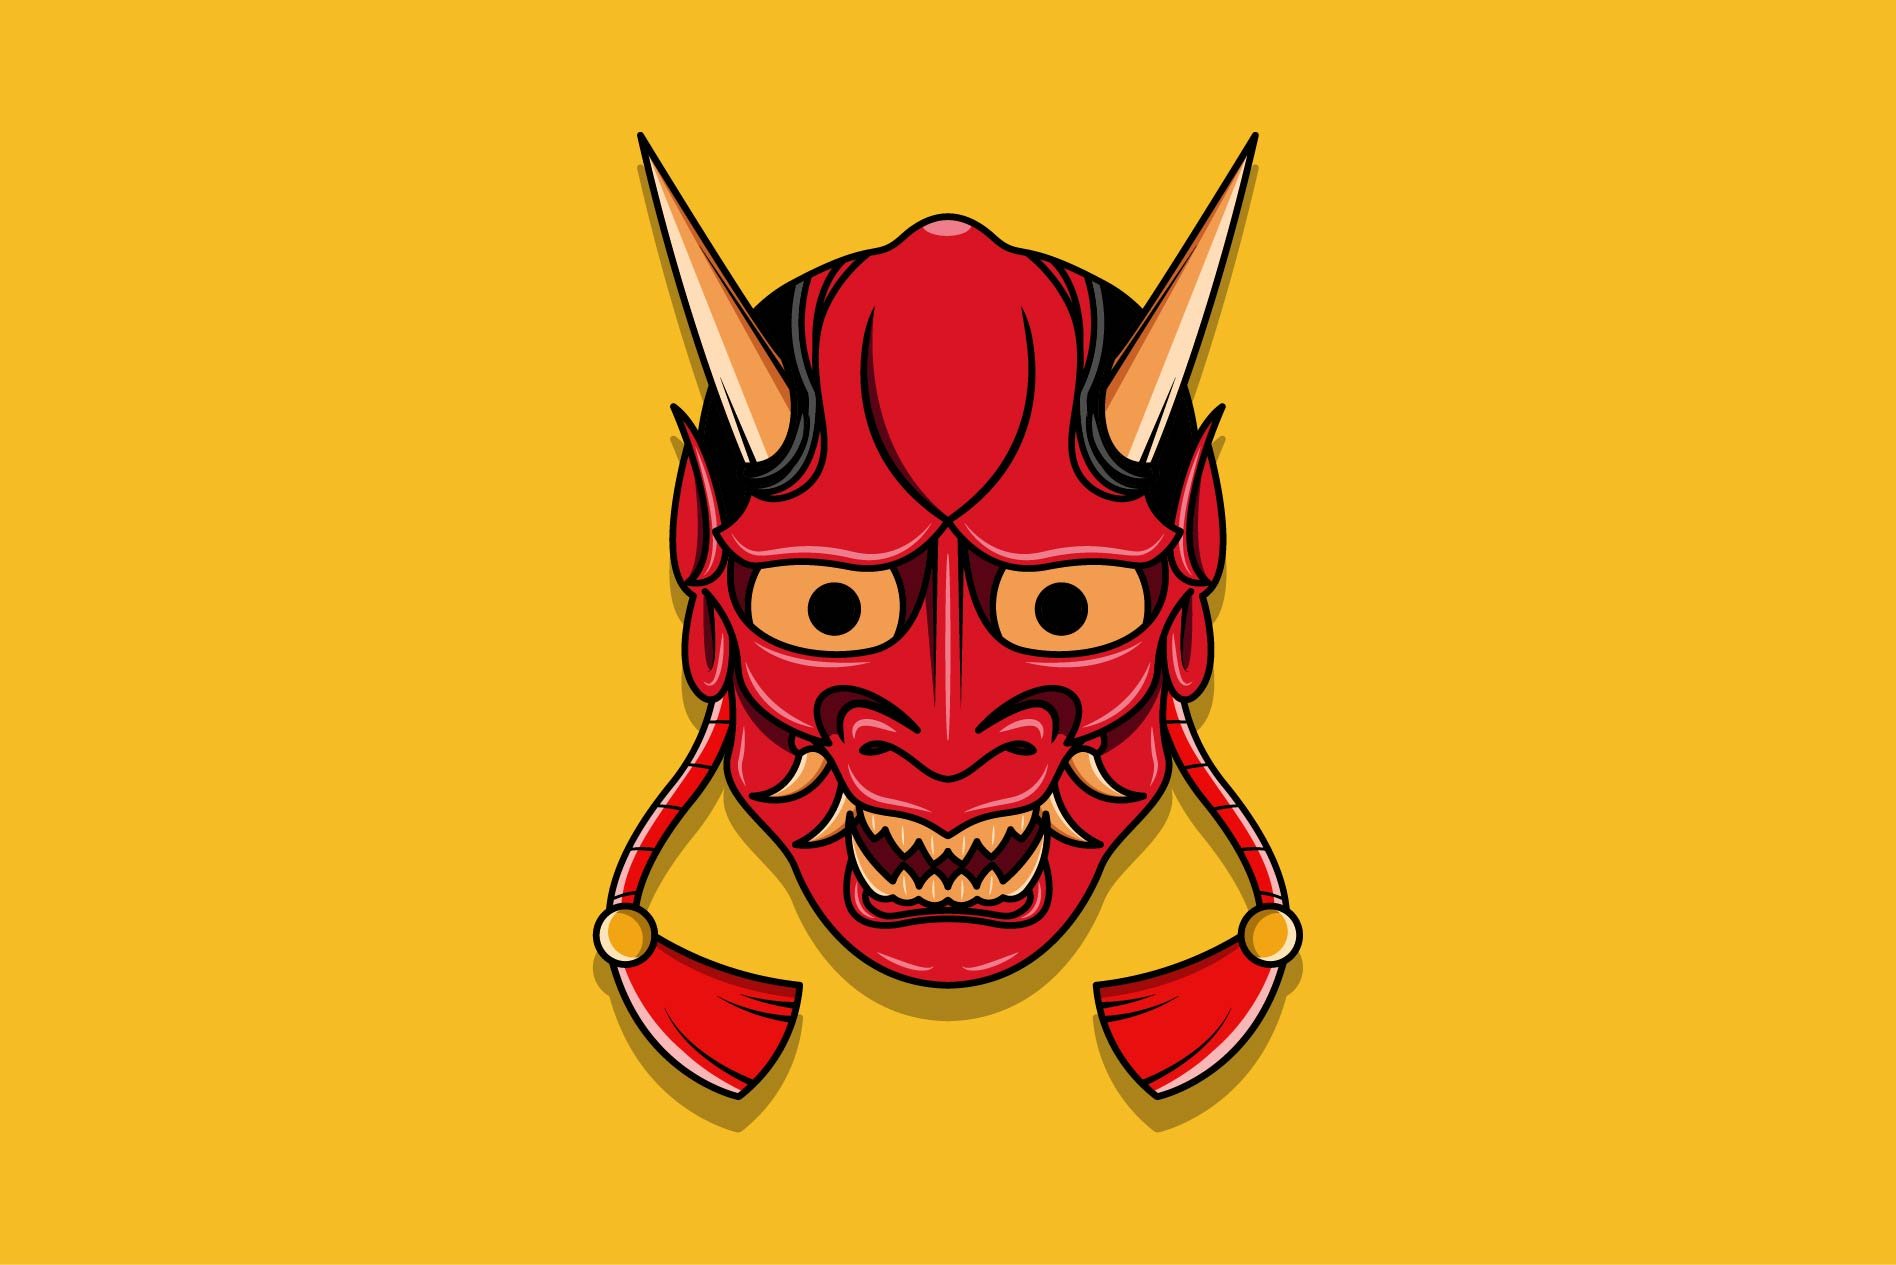 Oni japanese devil mask #22 cover image.